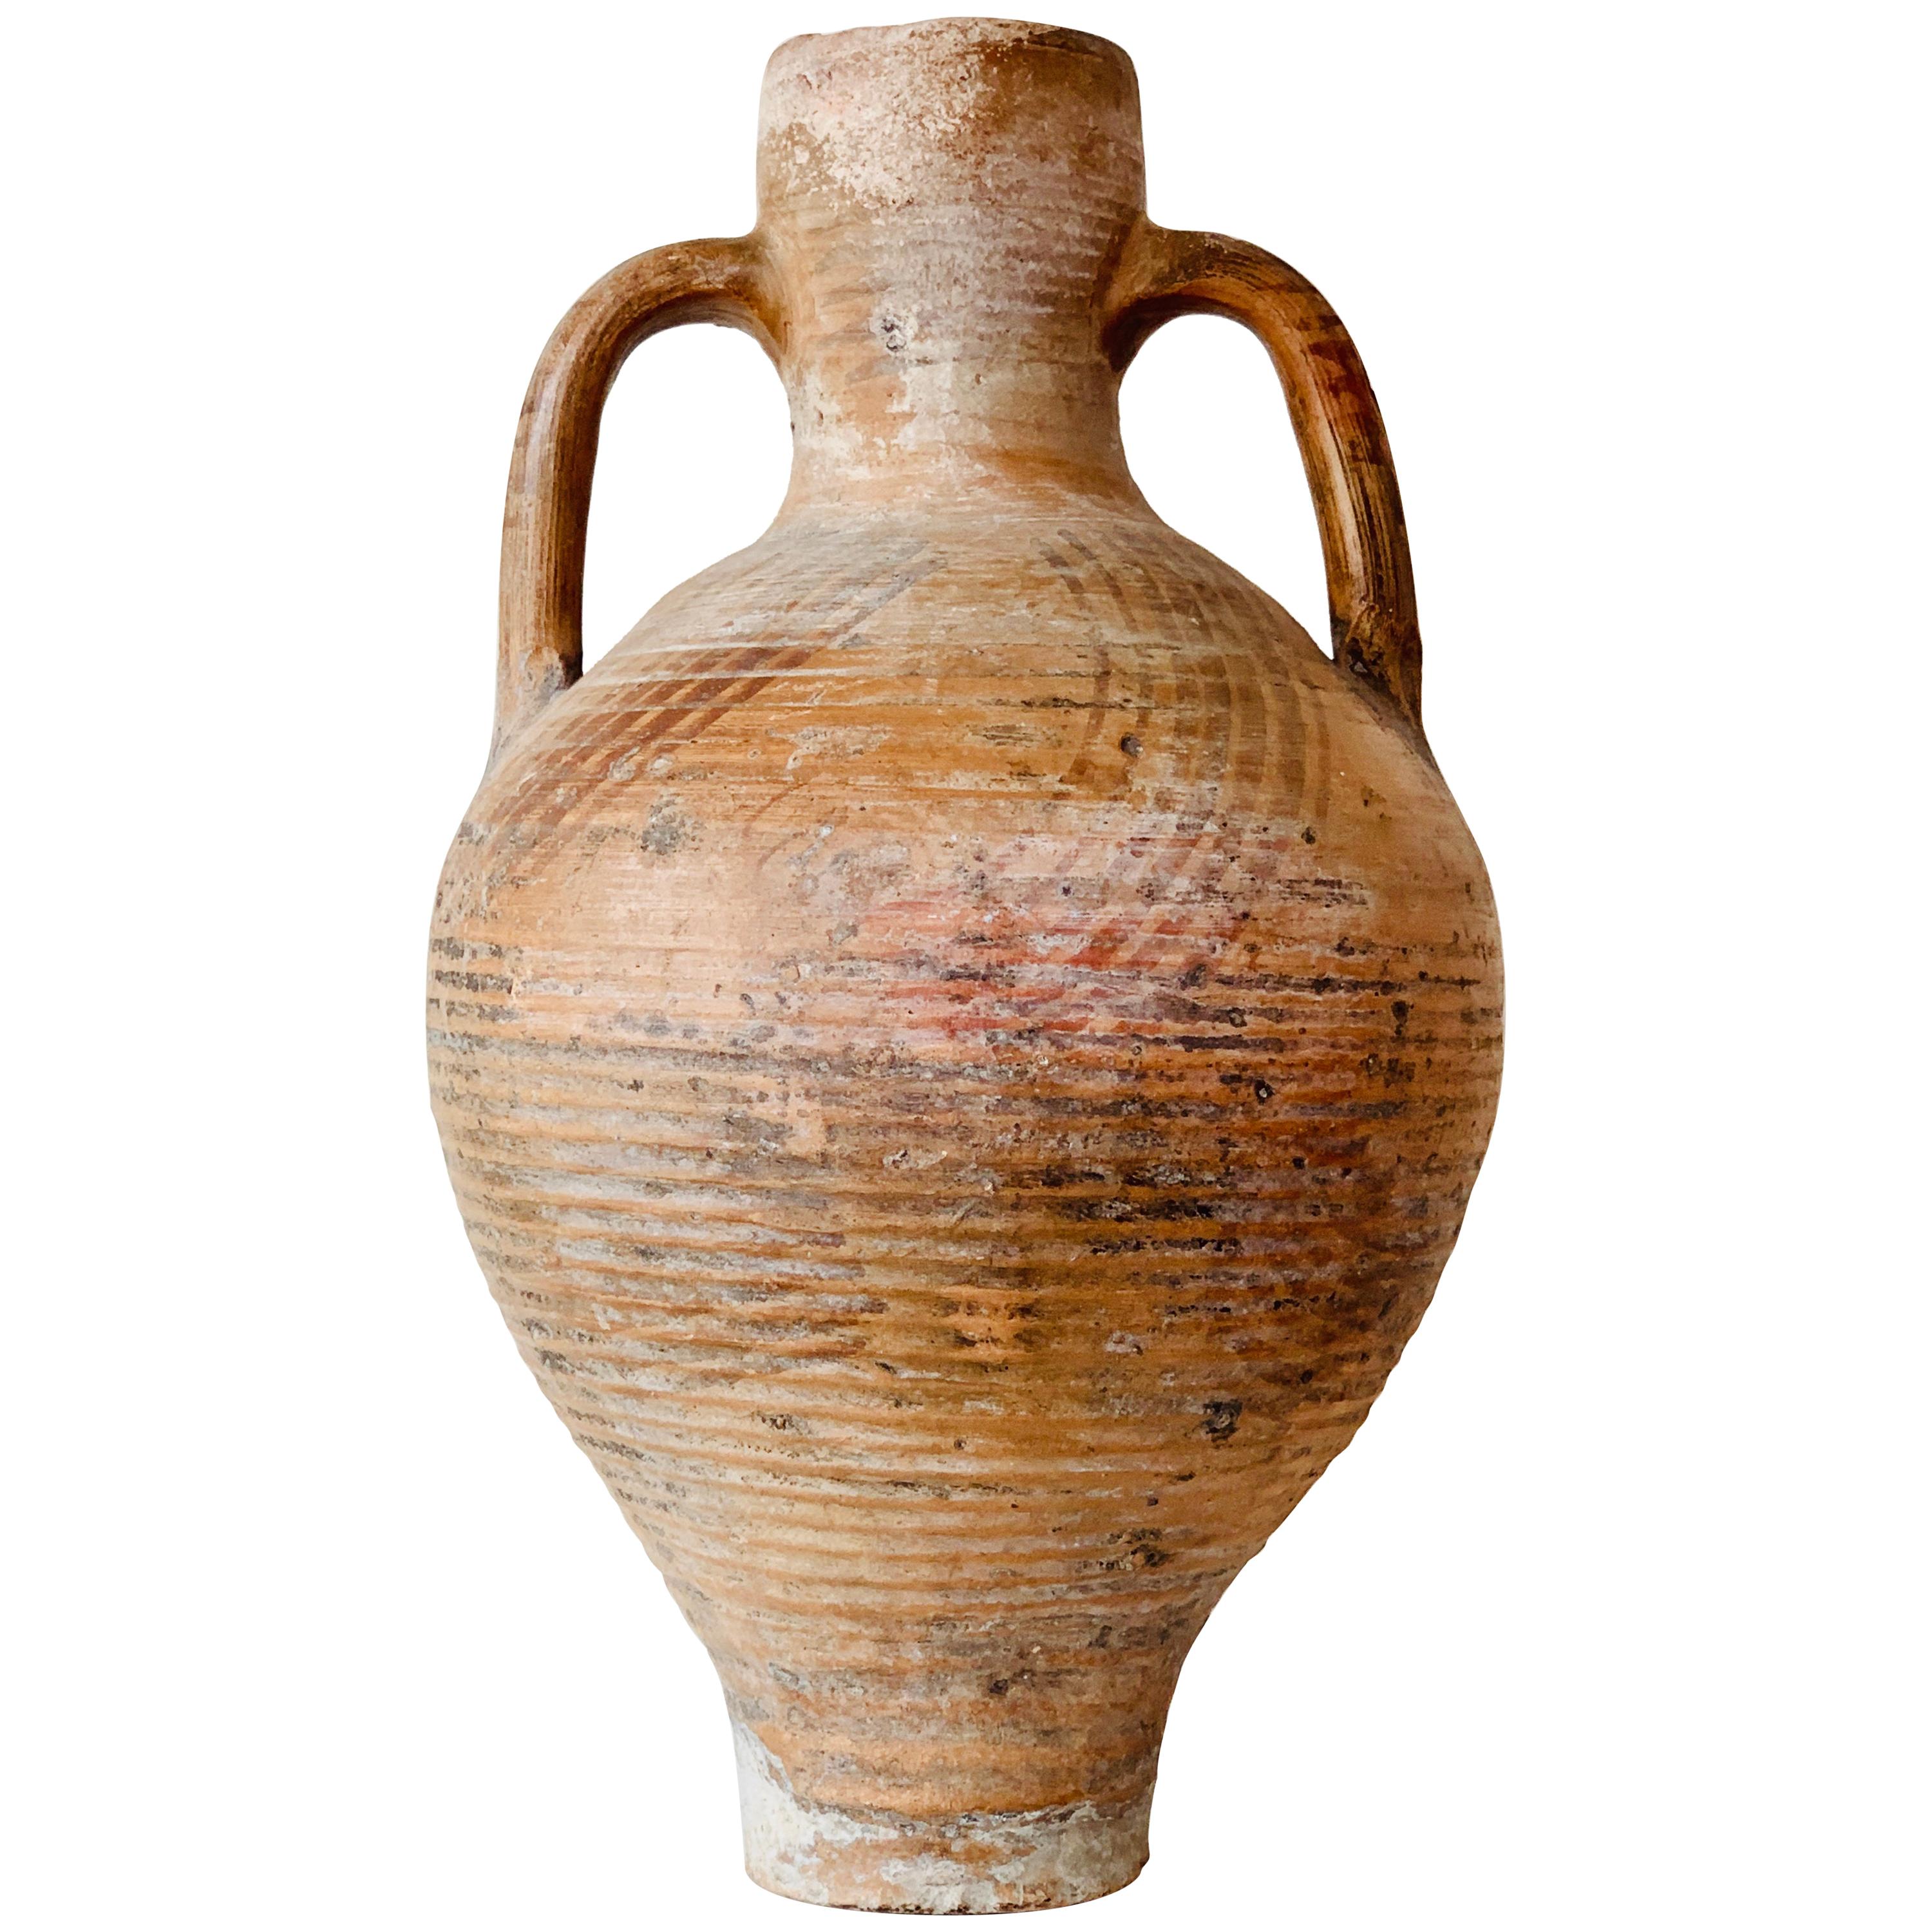 19h Jahrhundert Picher "Cantaro" aus Calanda:: Spanien:: Terrakotta-Vase